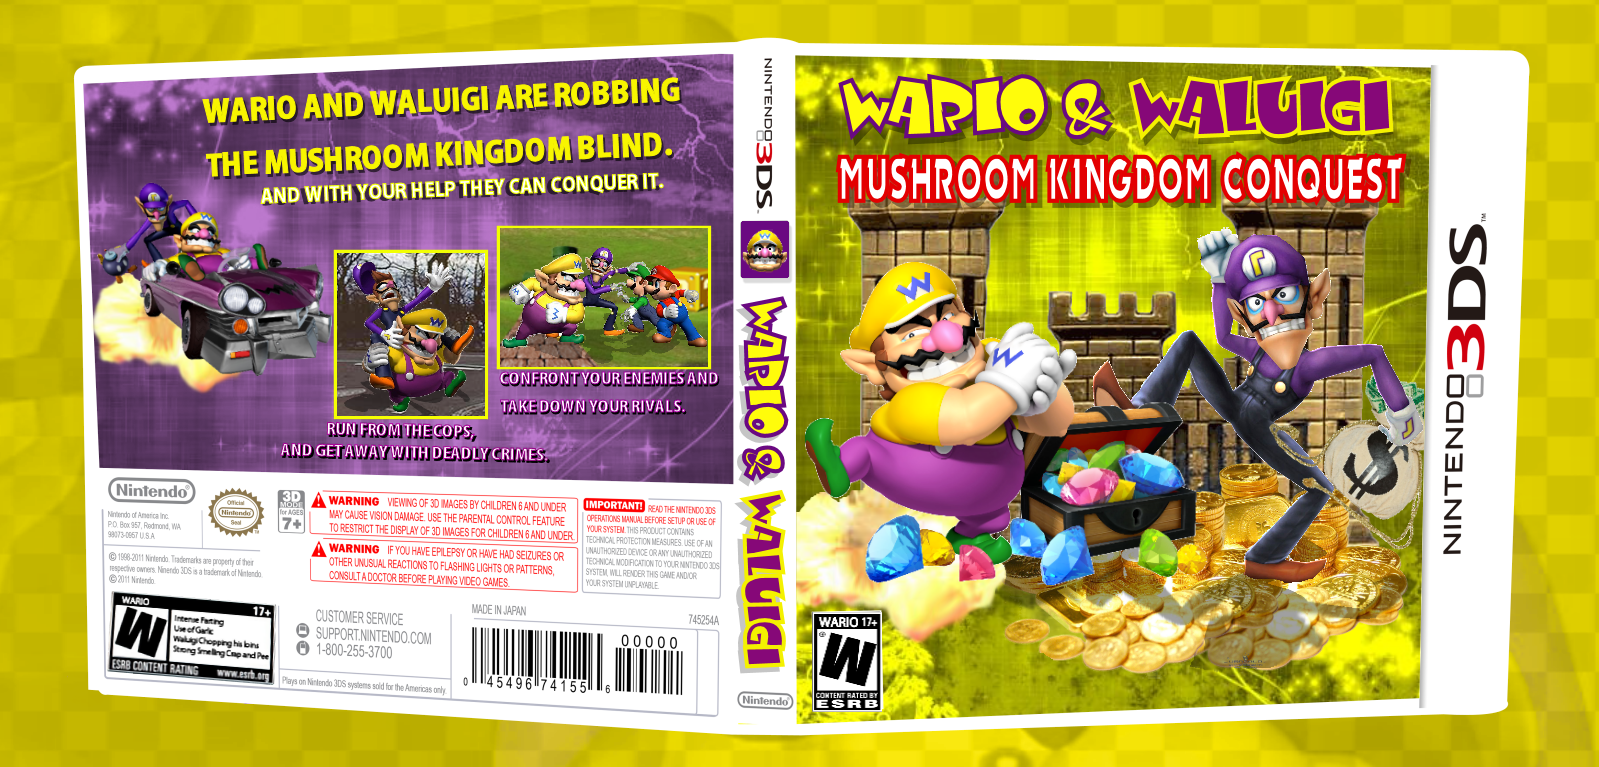 Wario and Waluigi: Mushroom Kingdom Conquest box cover